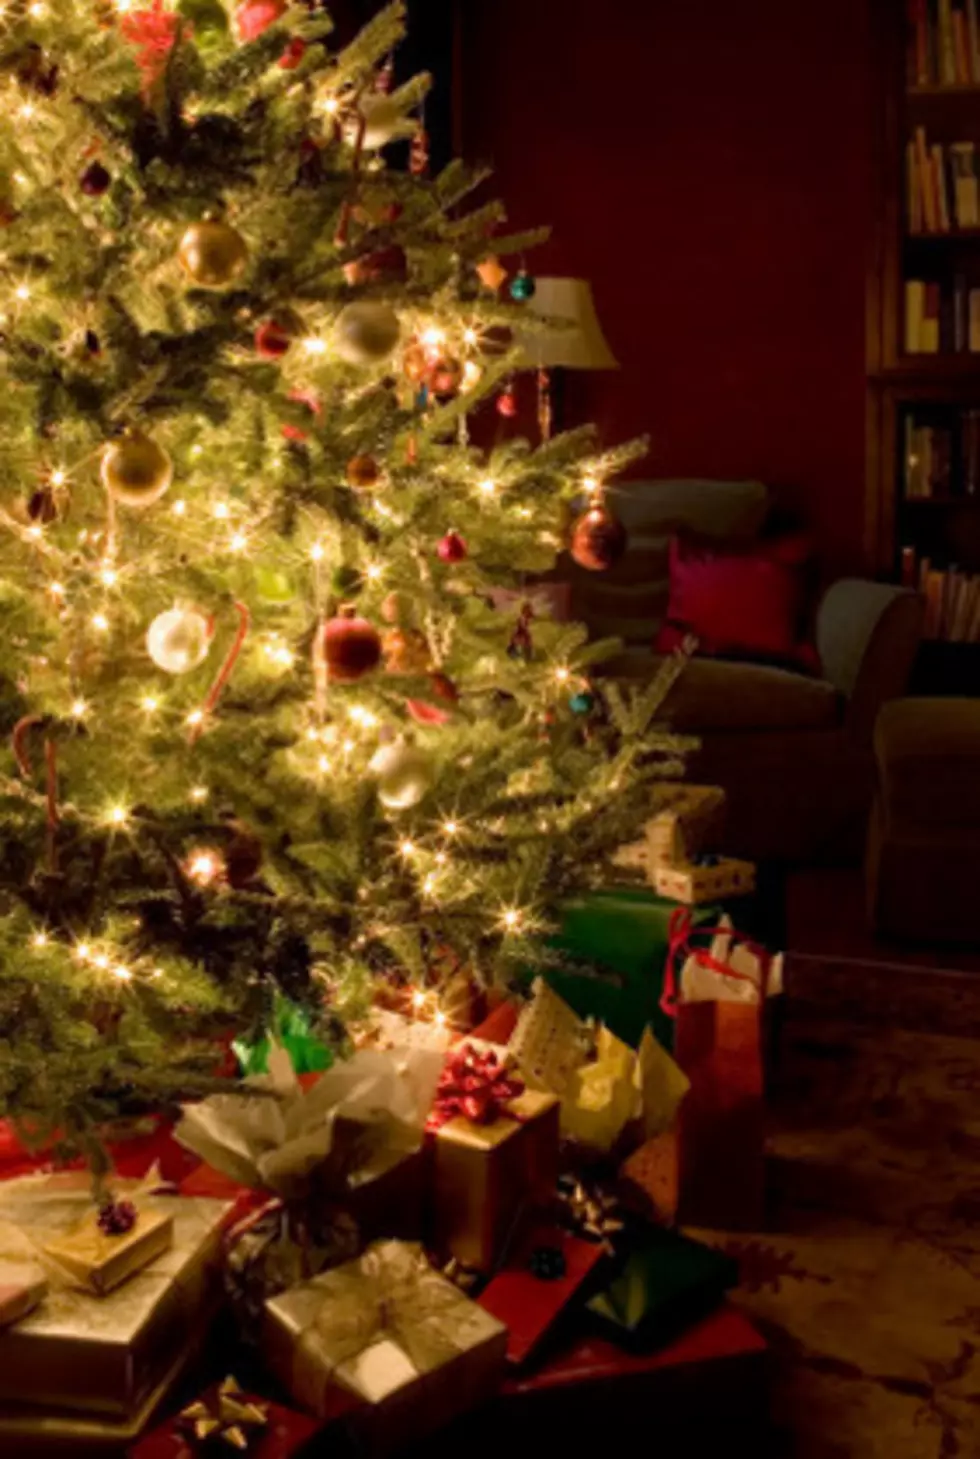 Cats vs Christmas Trees Who Wins [Video]